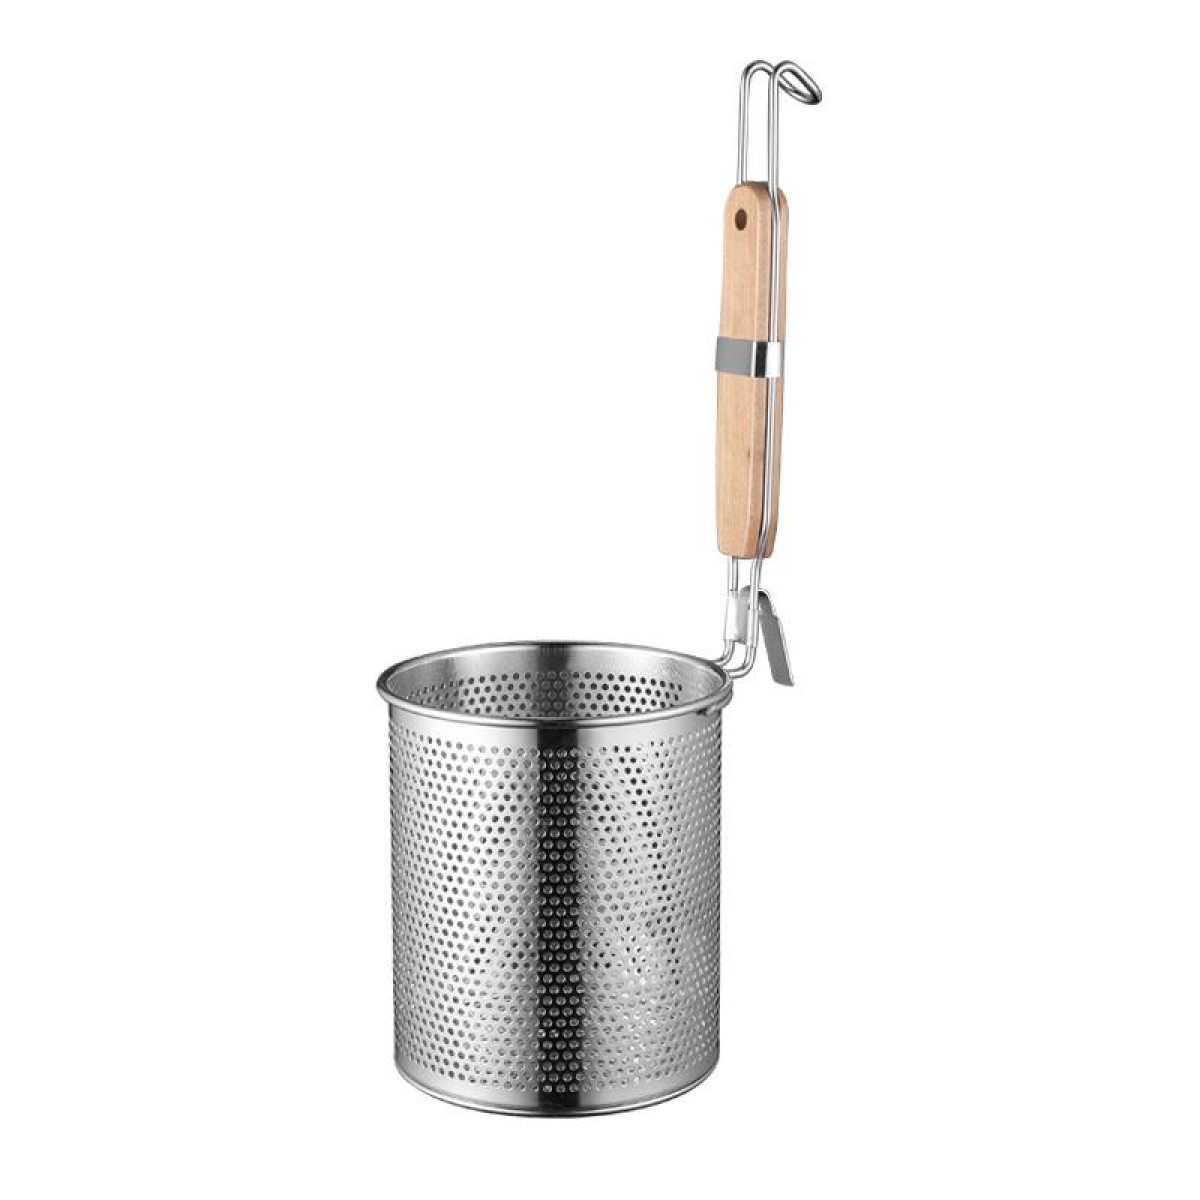 Household Stainless Steel Wooden Handle Spoon Kitchen Filtering Powder Oil Leakage Frying Basket, Model: 14cm Flat Handle